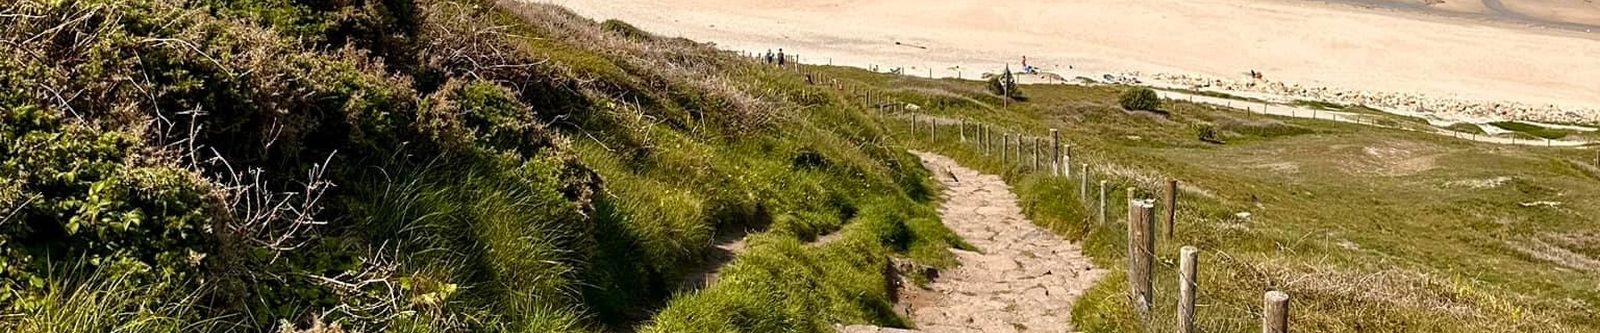 Trail leading down to Gwynver Beach